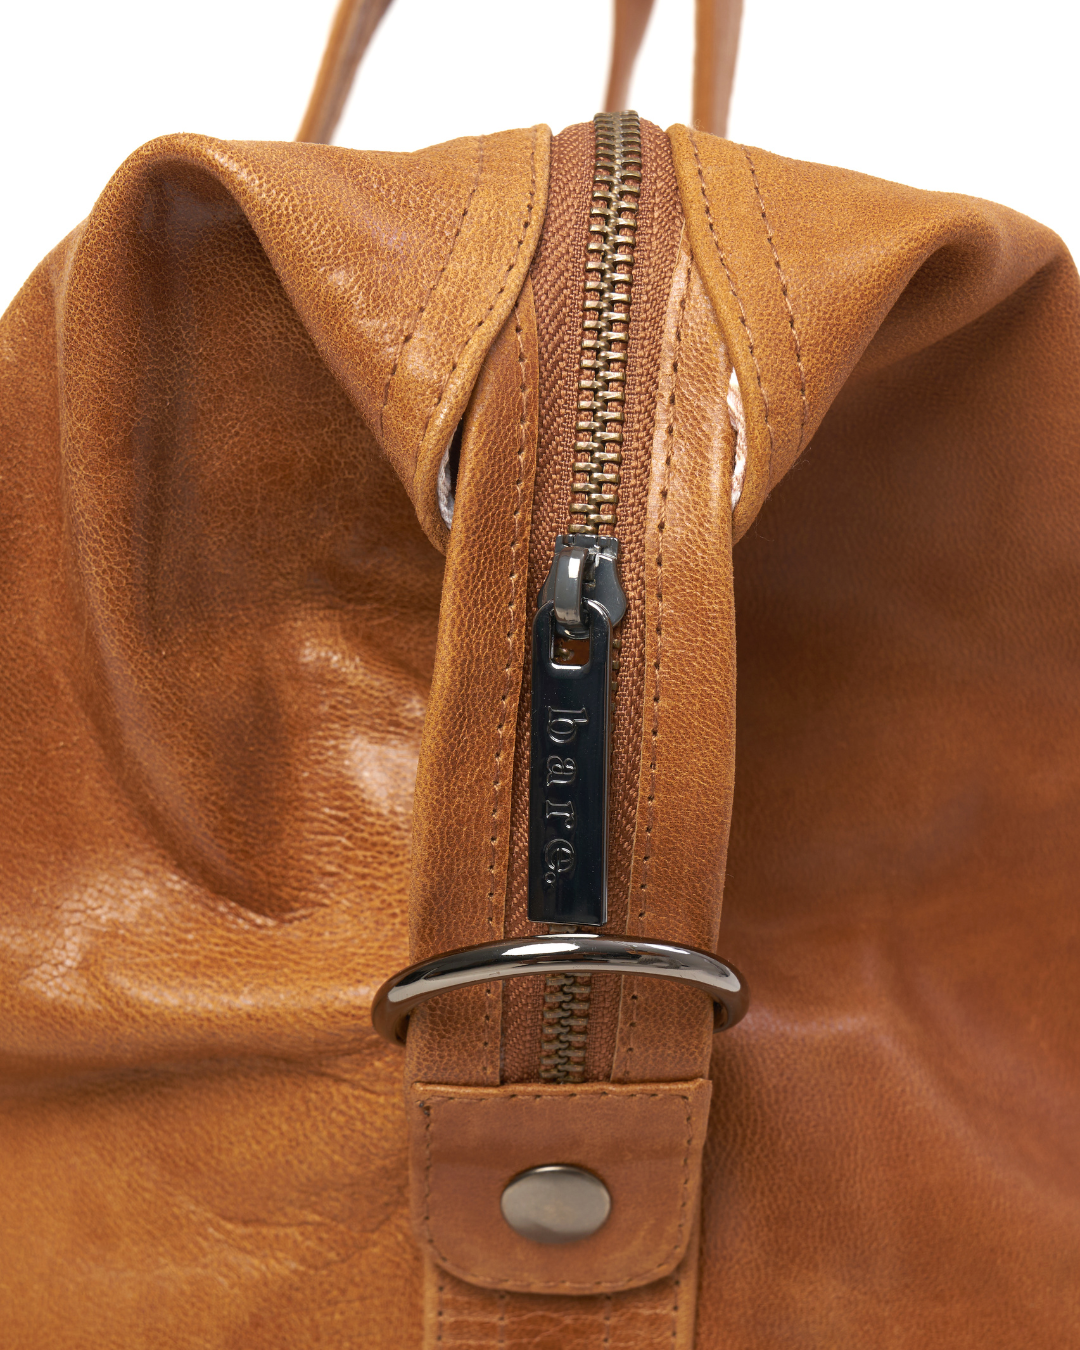 Bare Travel Bag - BARE Leather